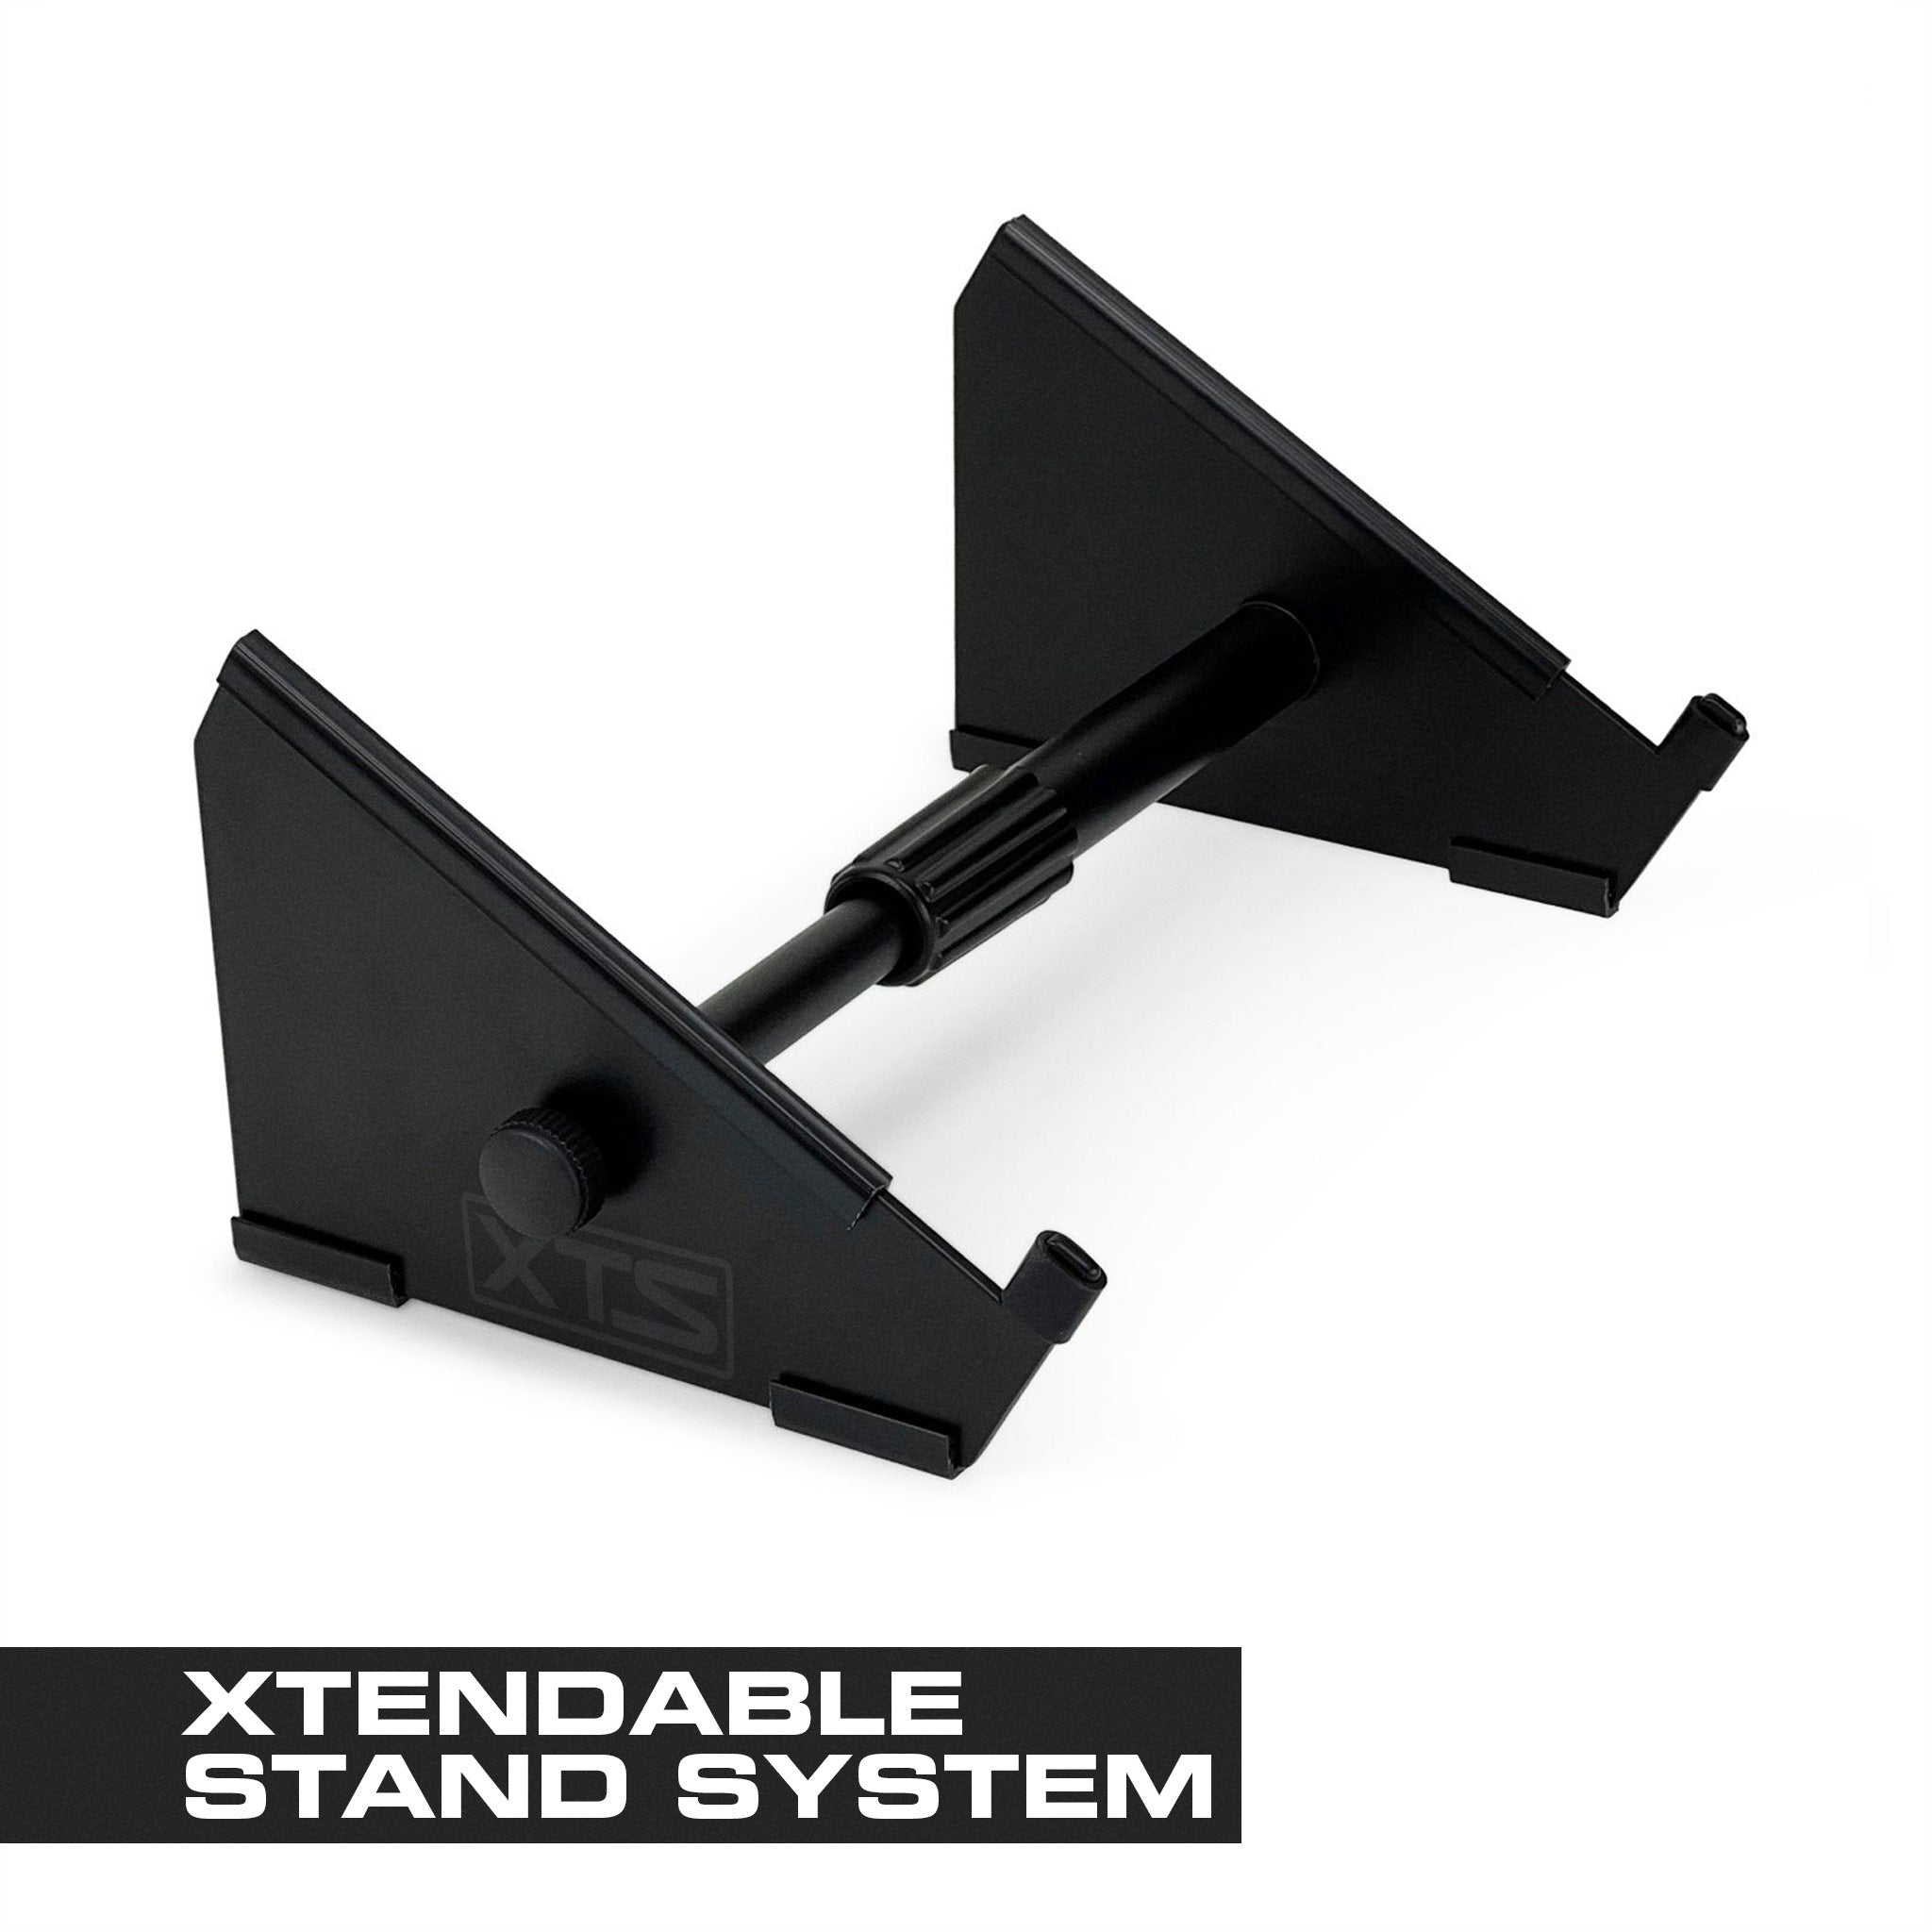 XTS Desktop Stand System